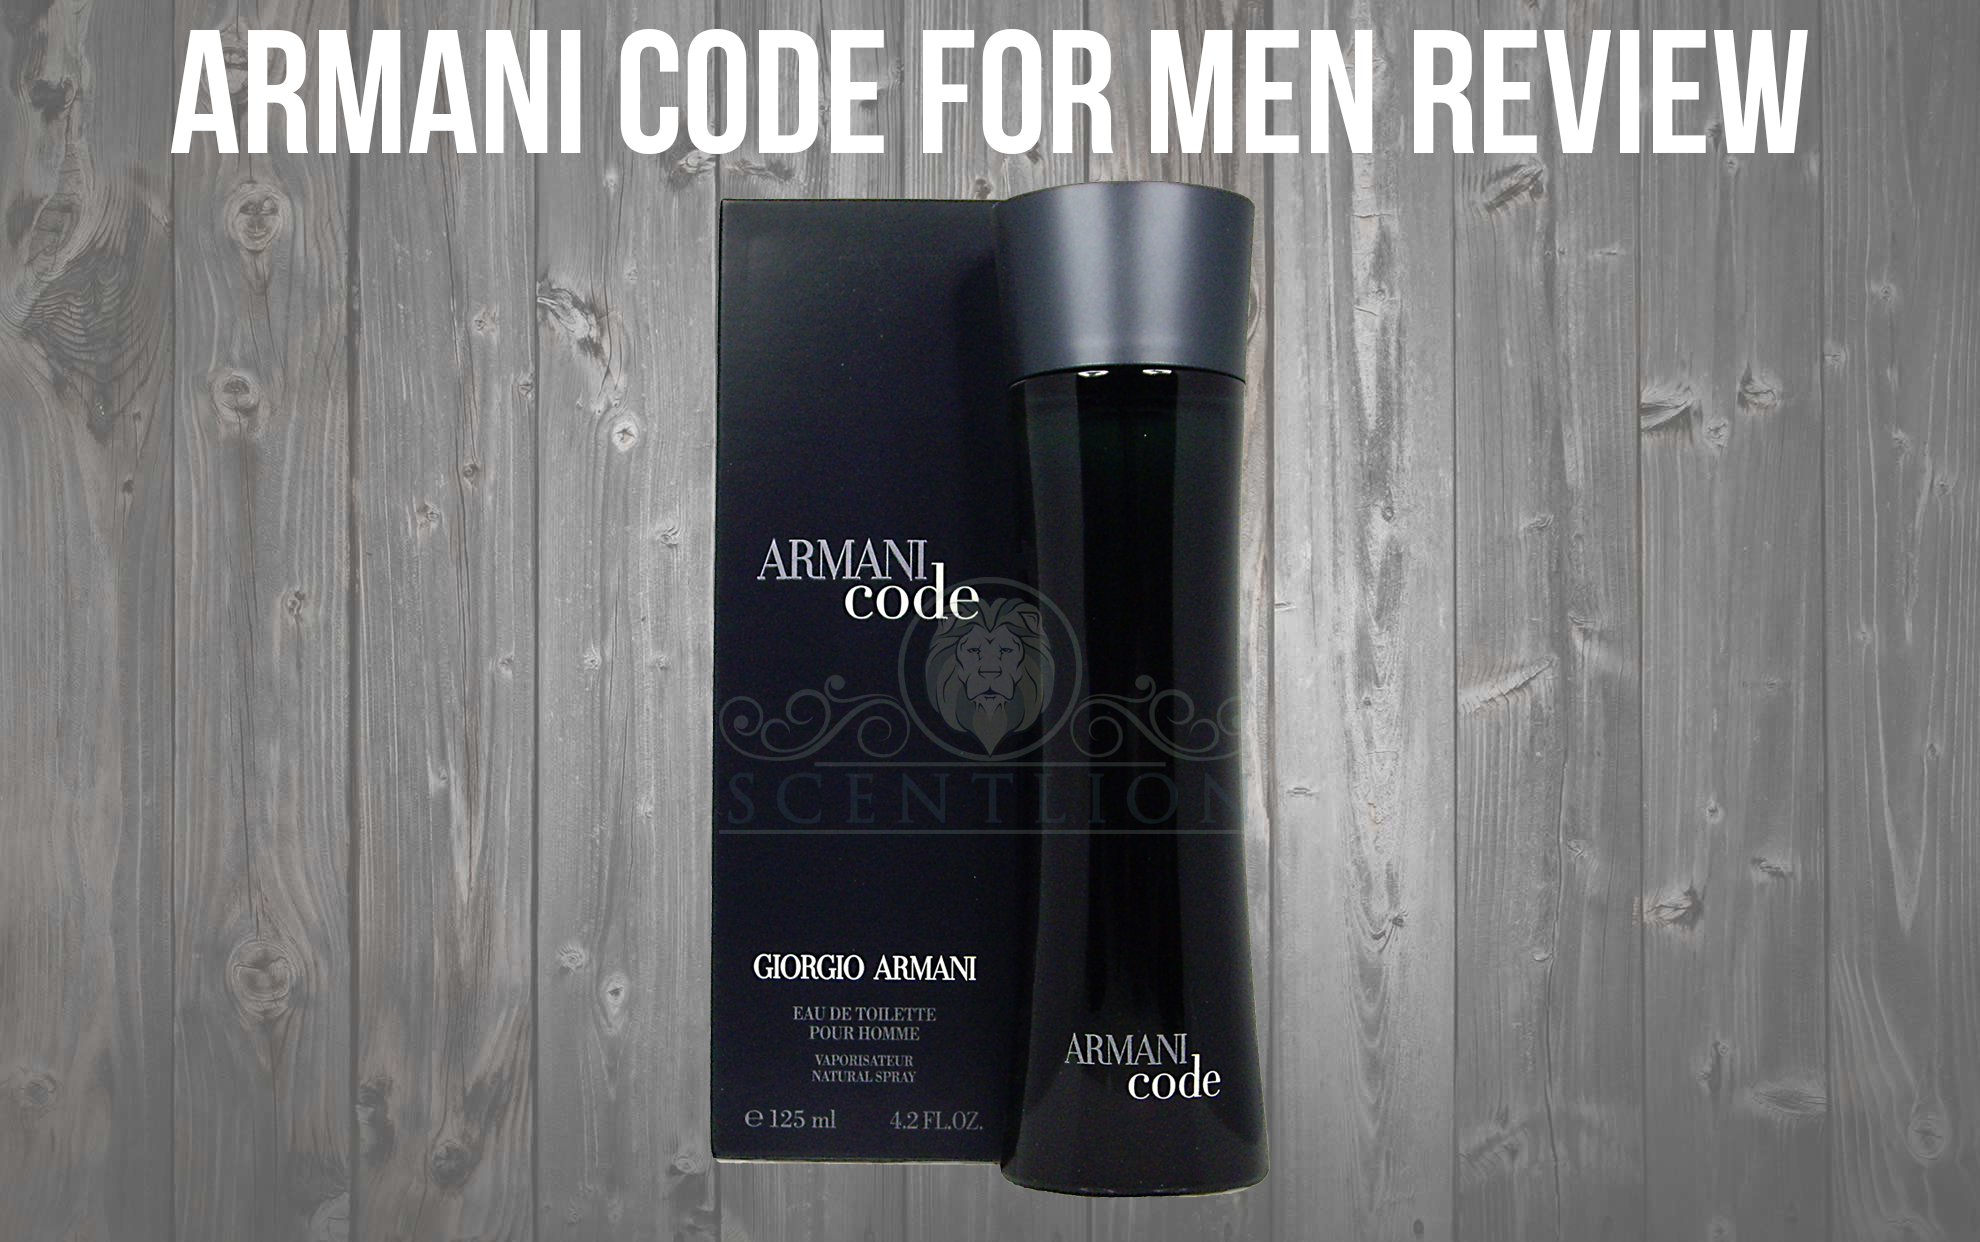 Armani Code for Men Review - Scent Lion Mens Cologne Review